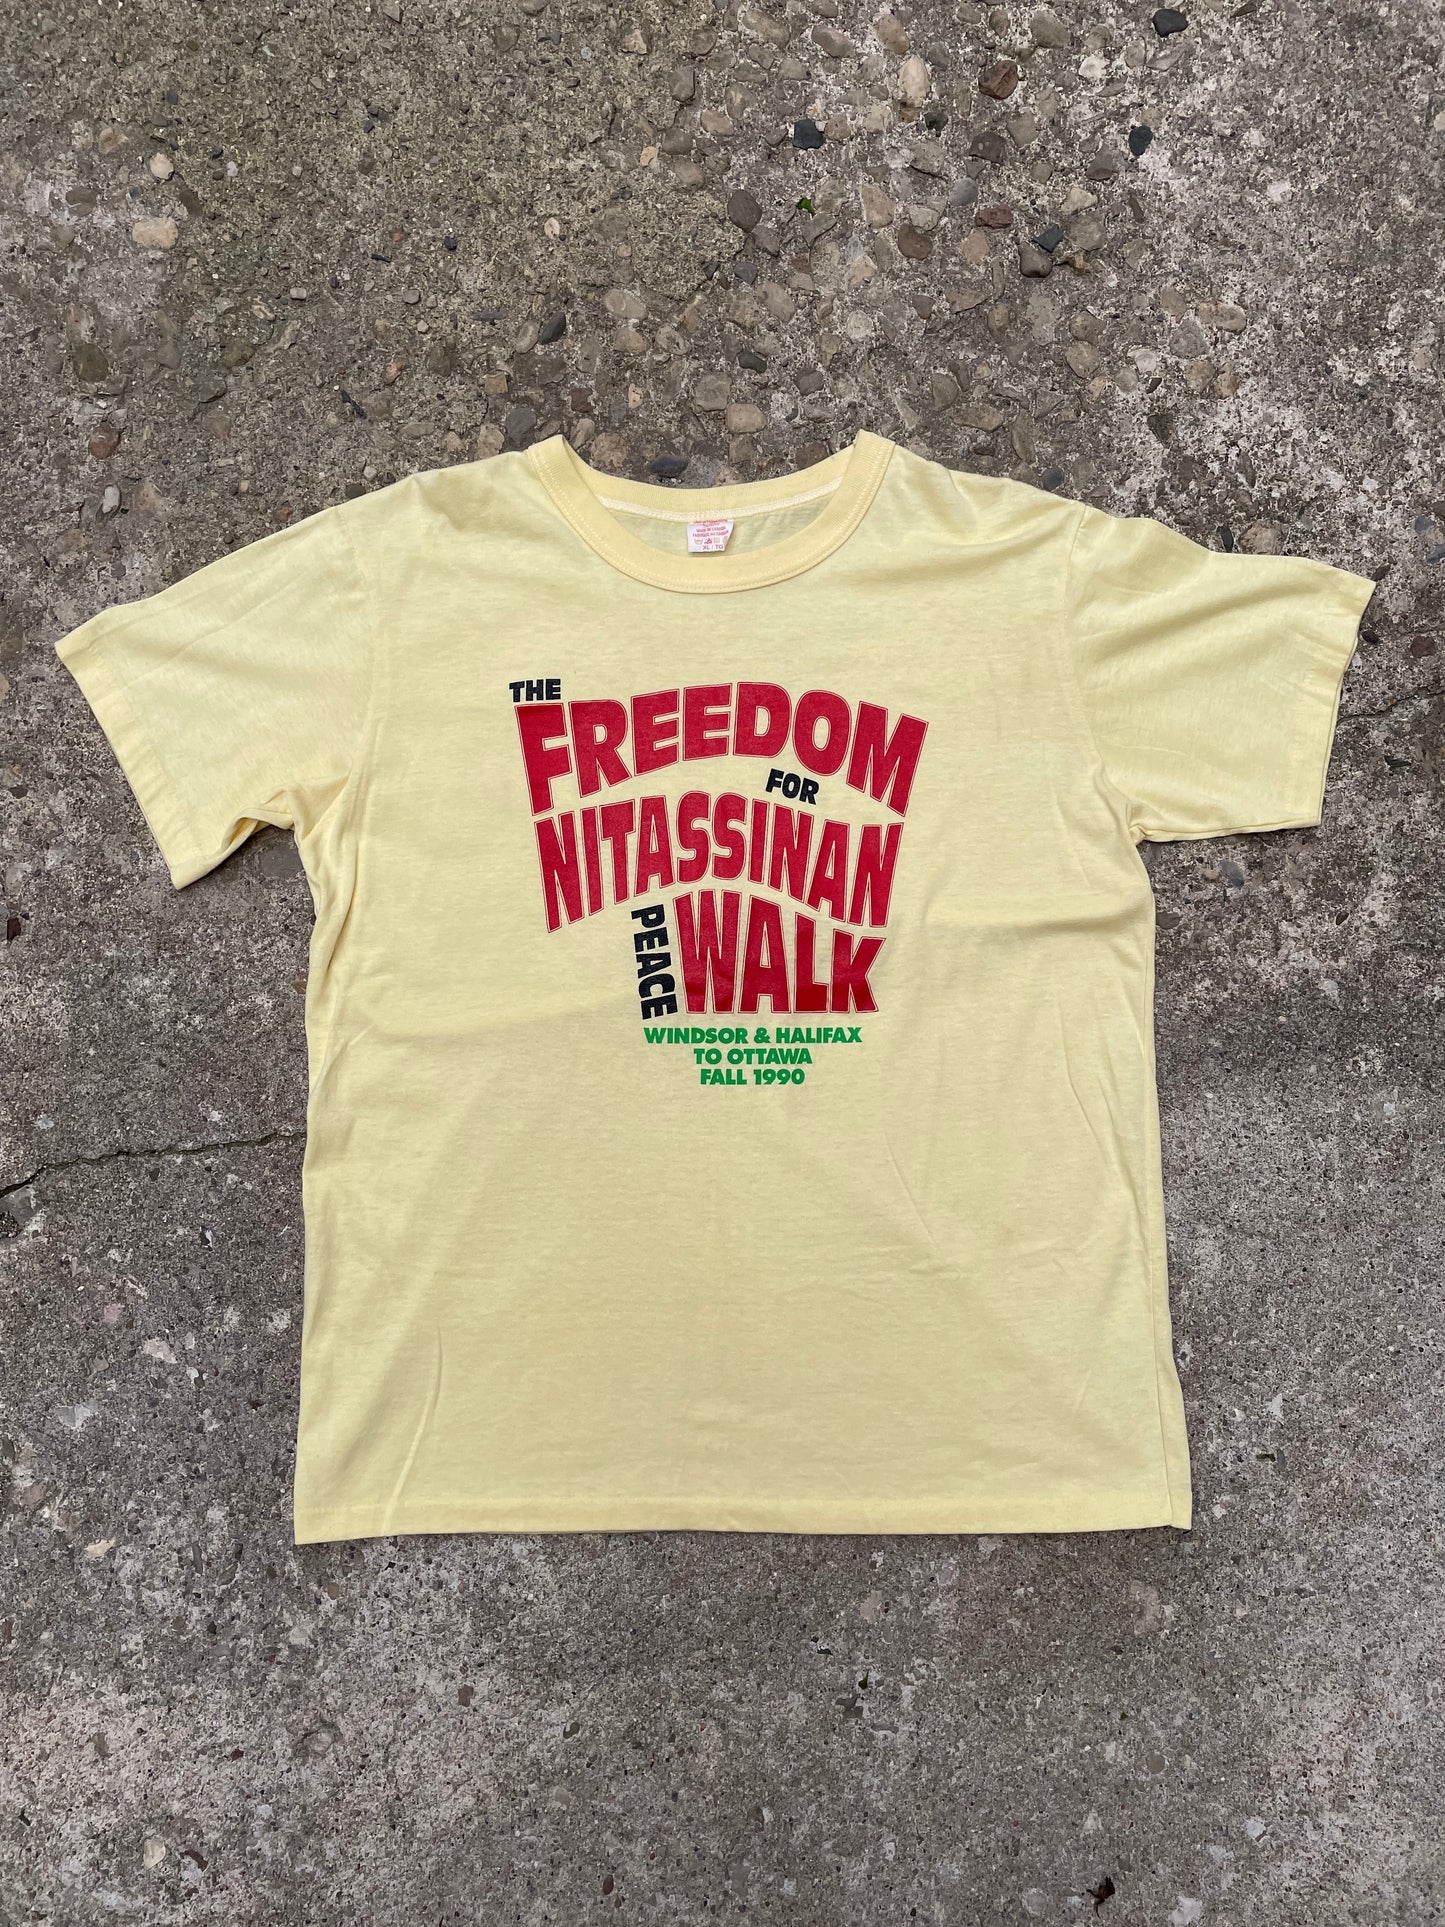 1990 Freedom for Nitassinan Peace Walk Graphic T-Shirt - L